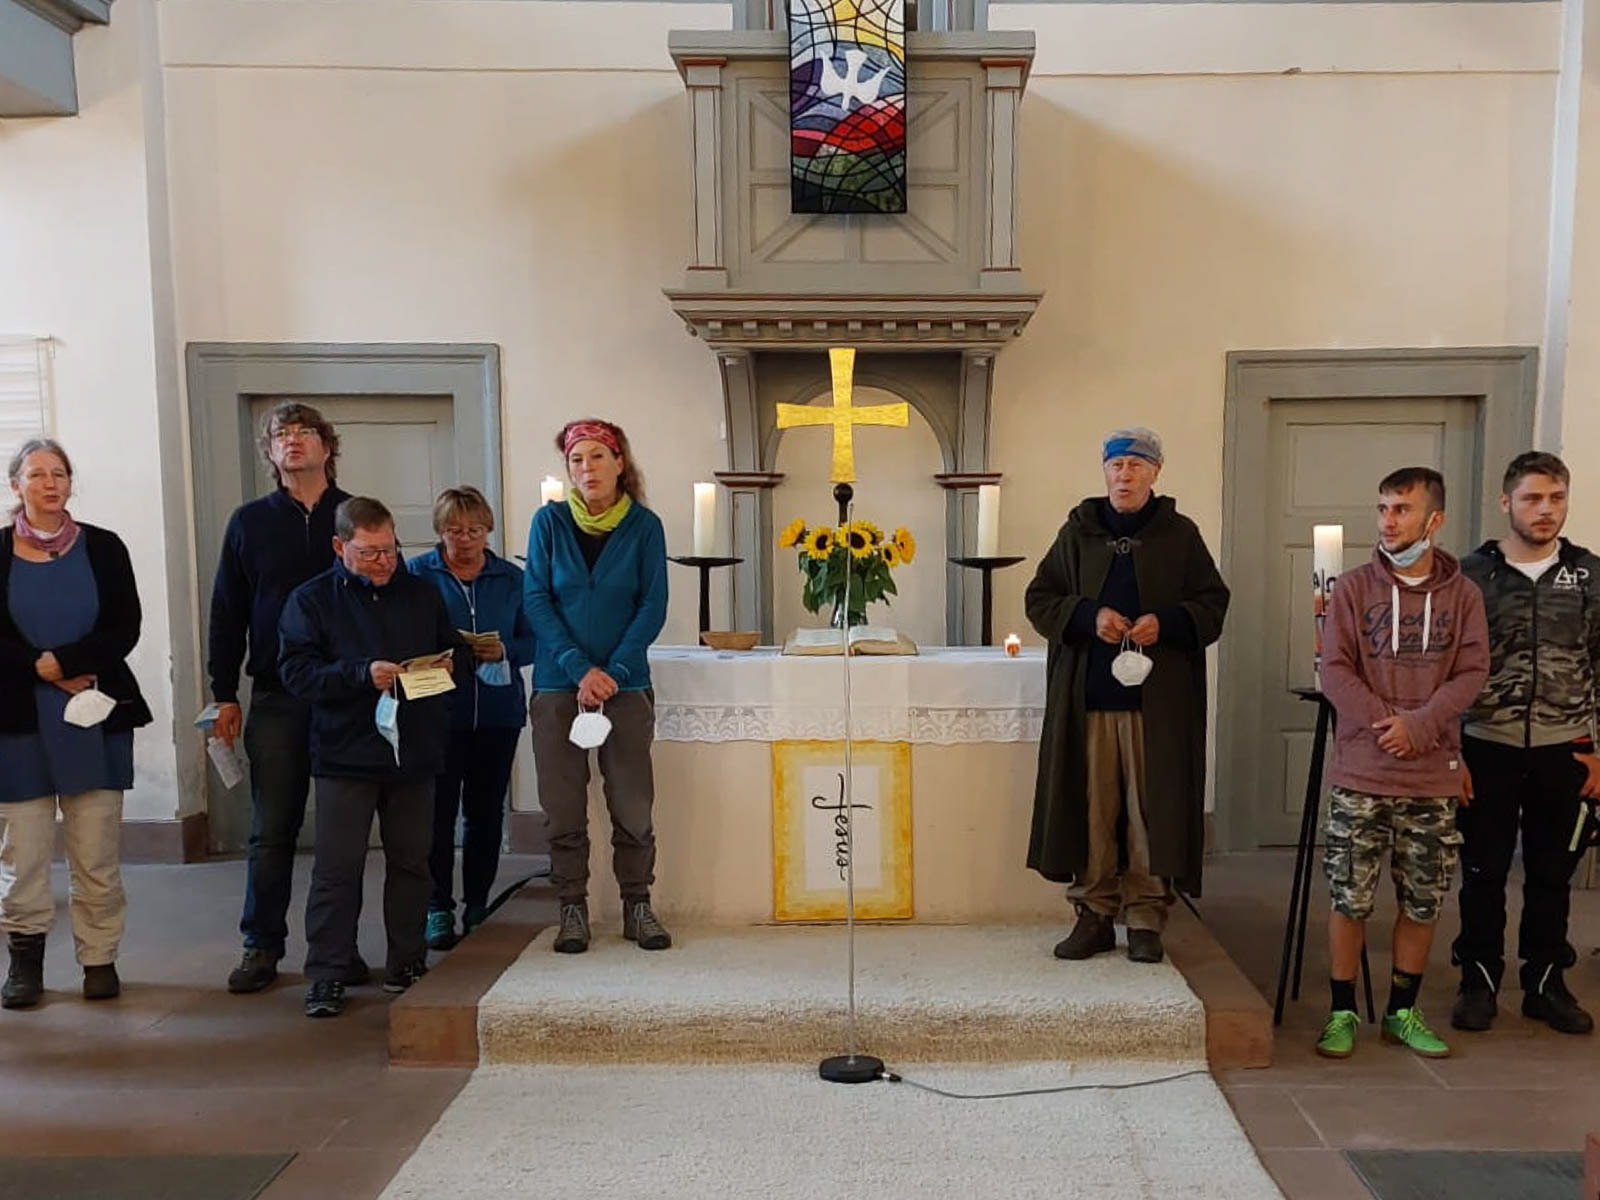 Pilgergottesdienst in Lindenfels mit Pfarrerin Jutta Grimm-Helbig